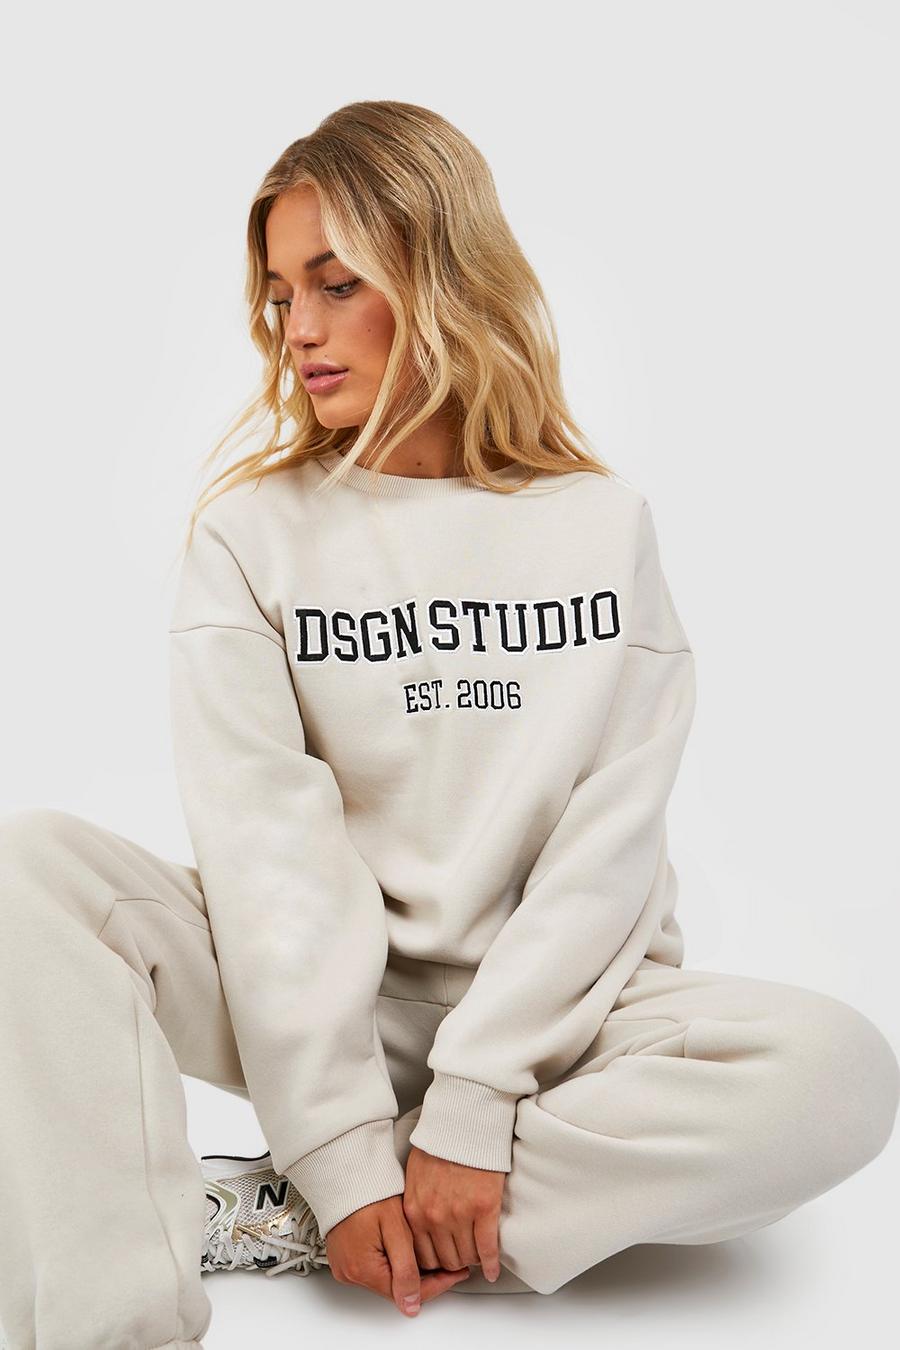 Sweatshirt-Trainingsanzug mit Dsgn Studio Appliation, Stone